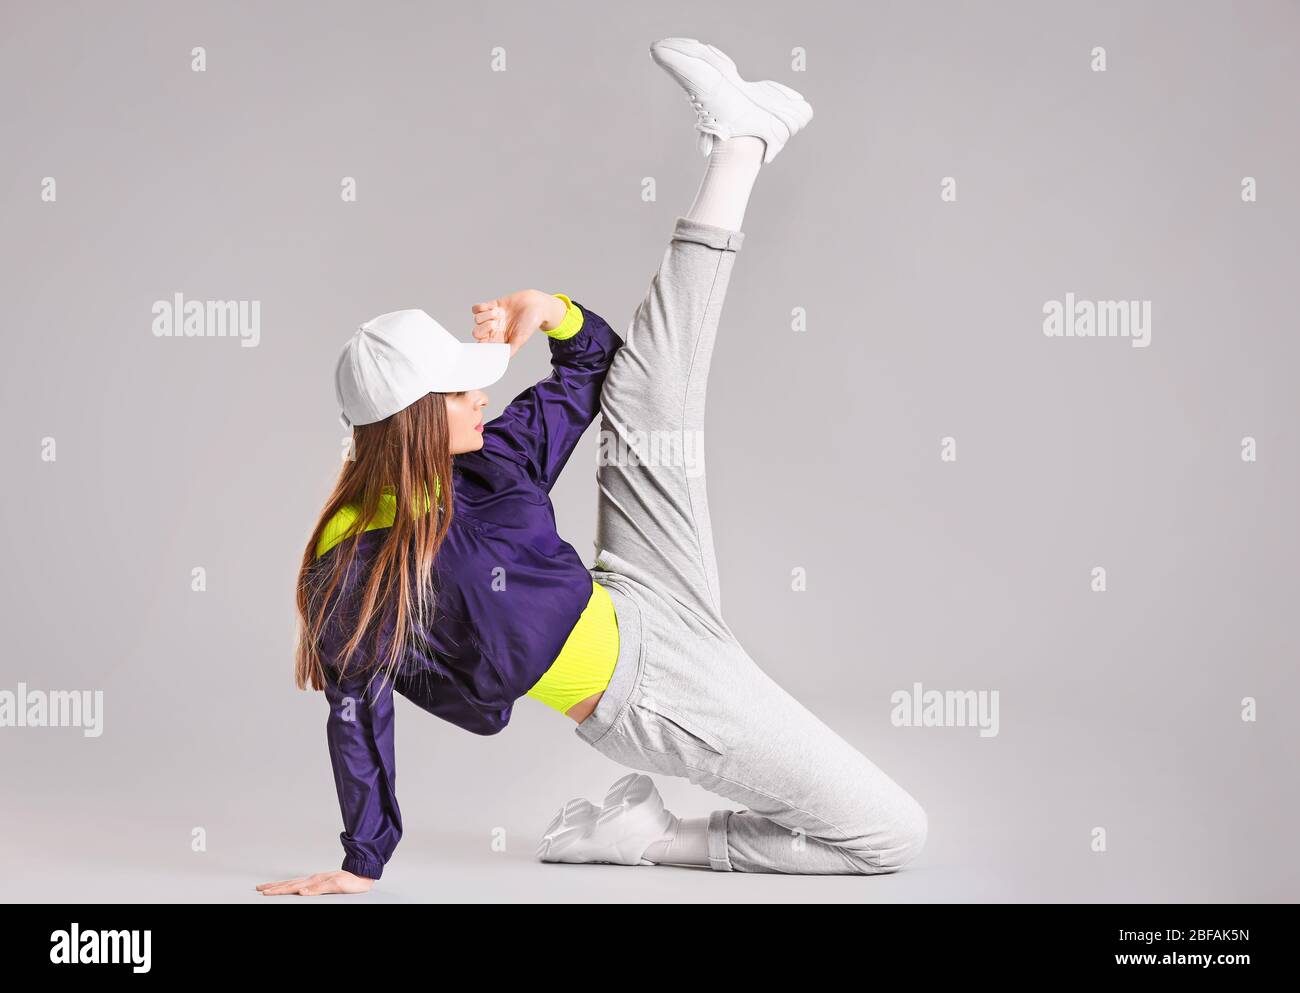 Giovane ballerina hip-hop femminile su sfondo grigio Foto stock - Alamy